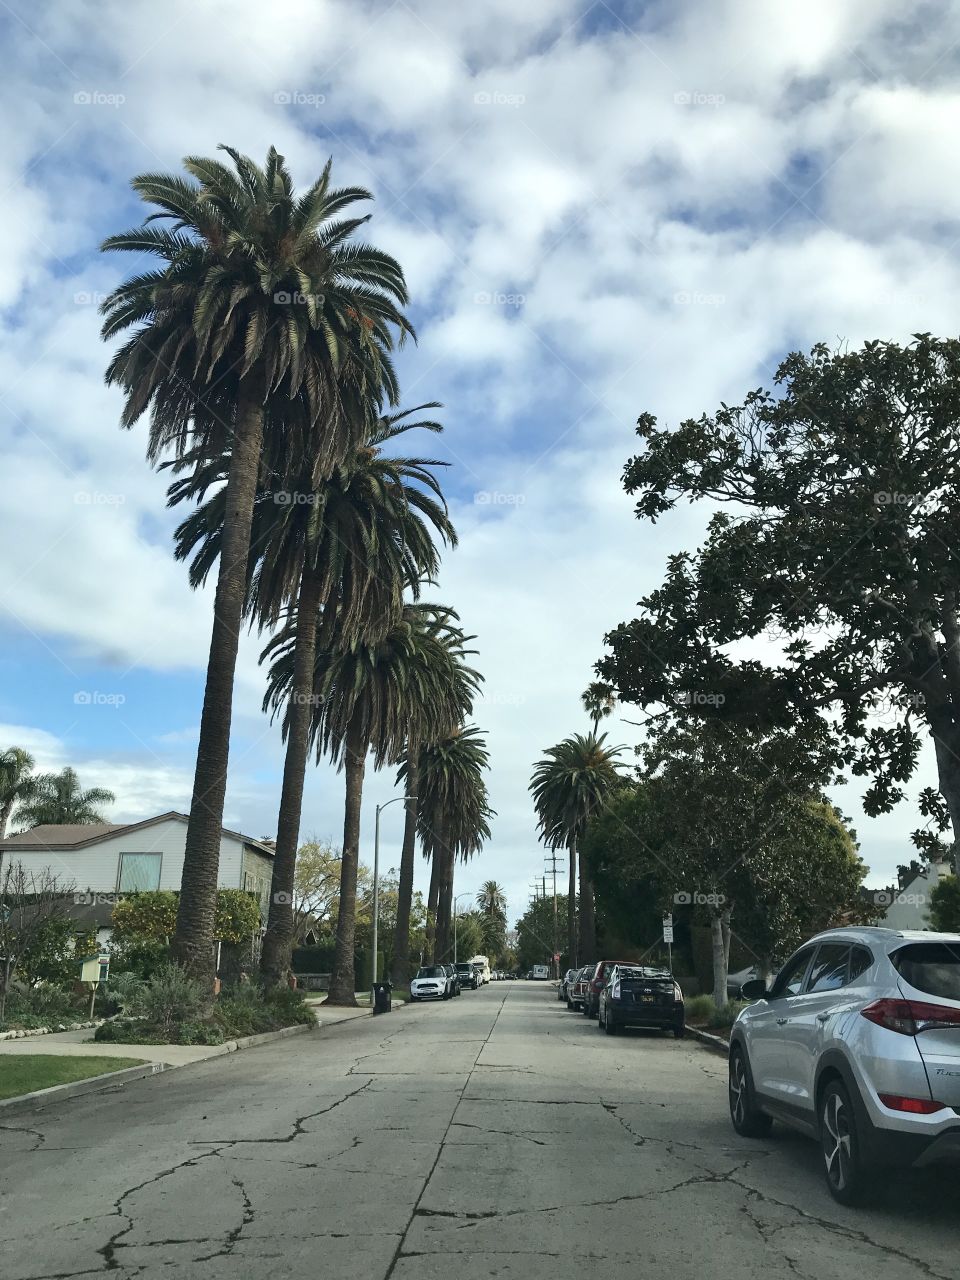 Suburbs in Venice Los Angeles California USA